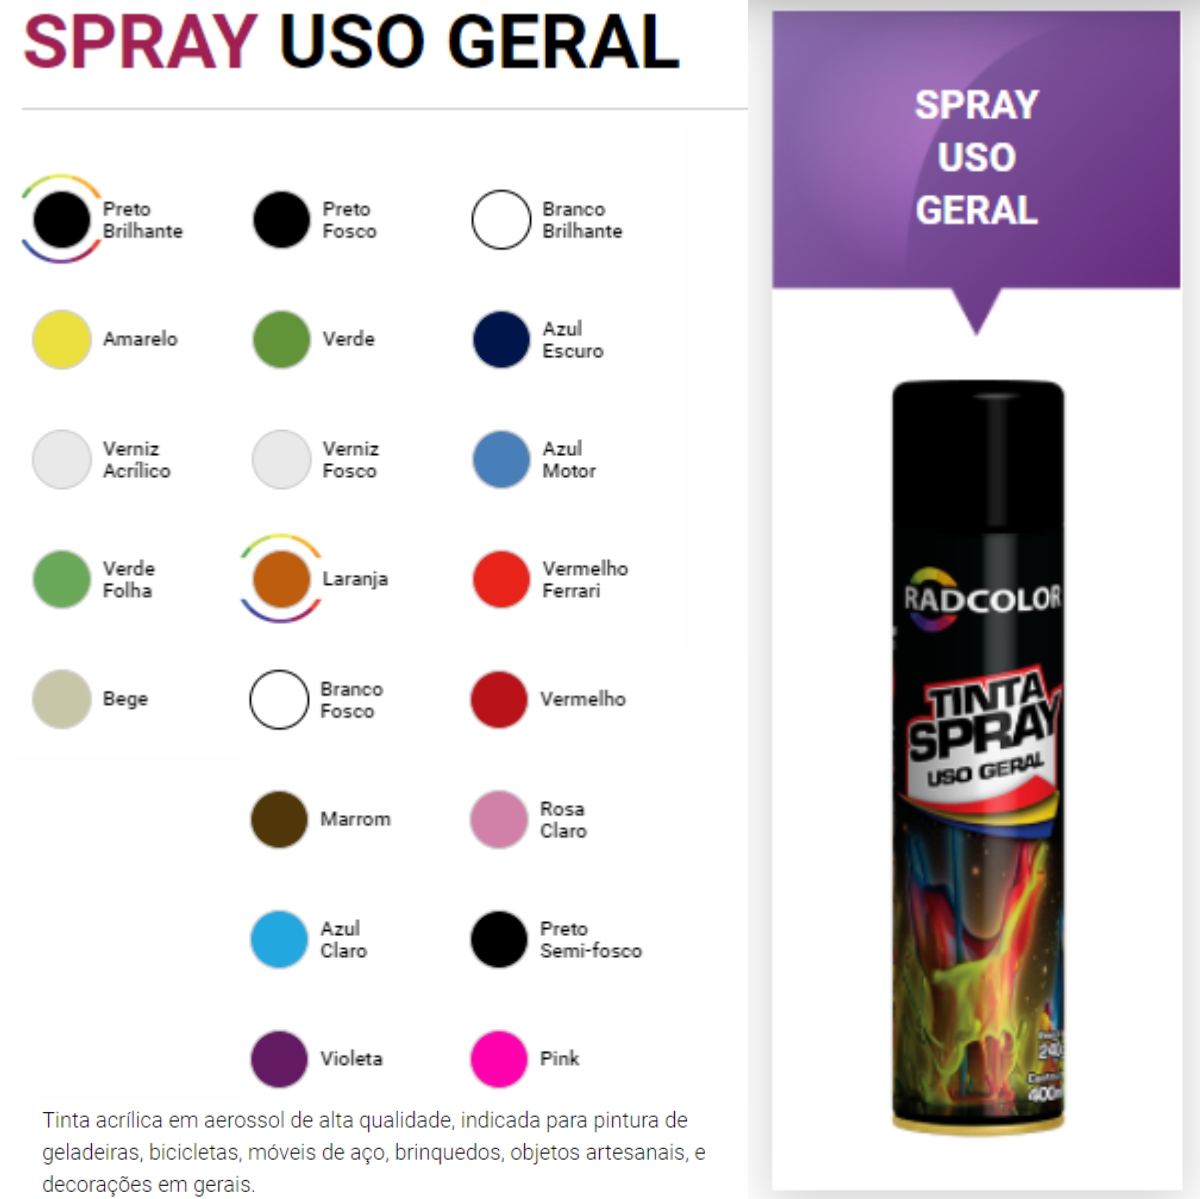 Tinta Spray, Uso Geral, Radcolor 400ml/240gr